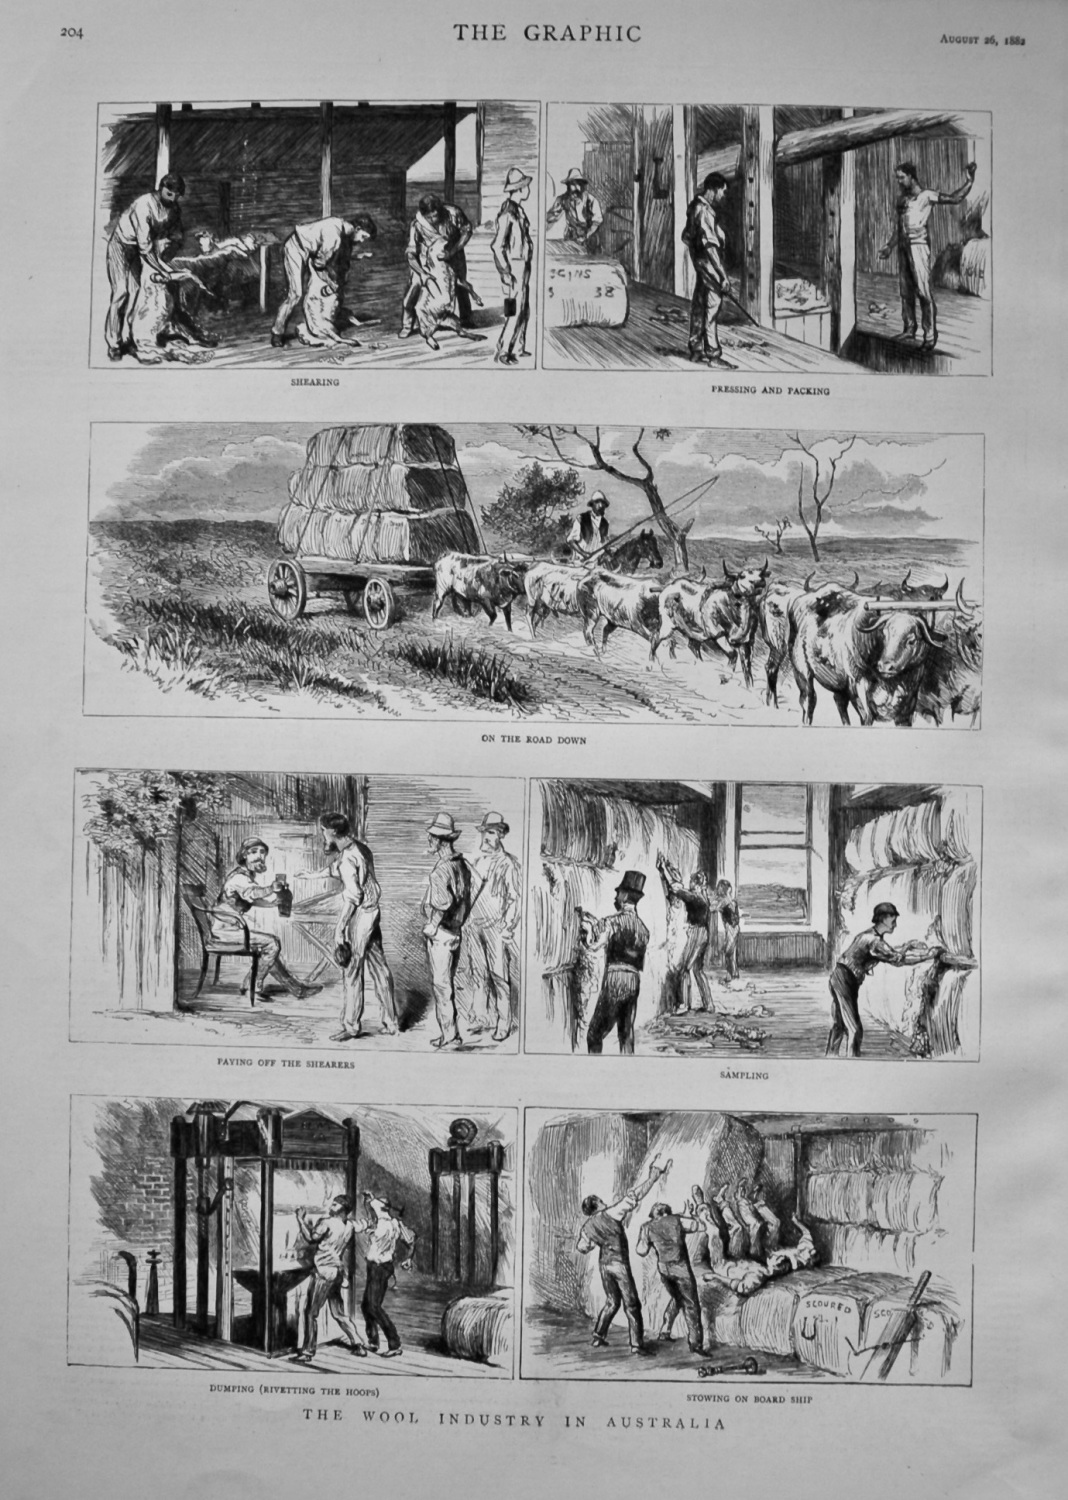 The Wool Industry in Australia. 1882.